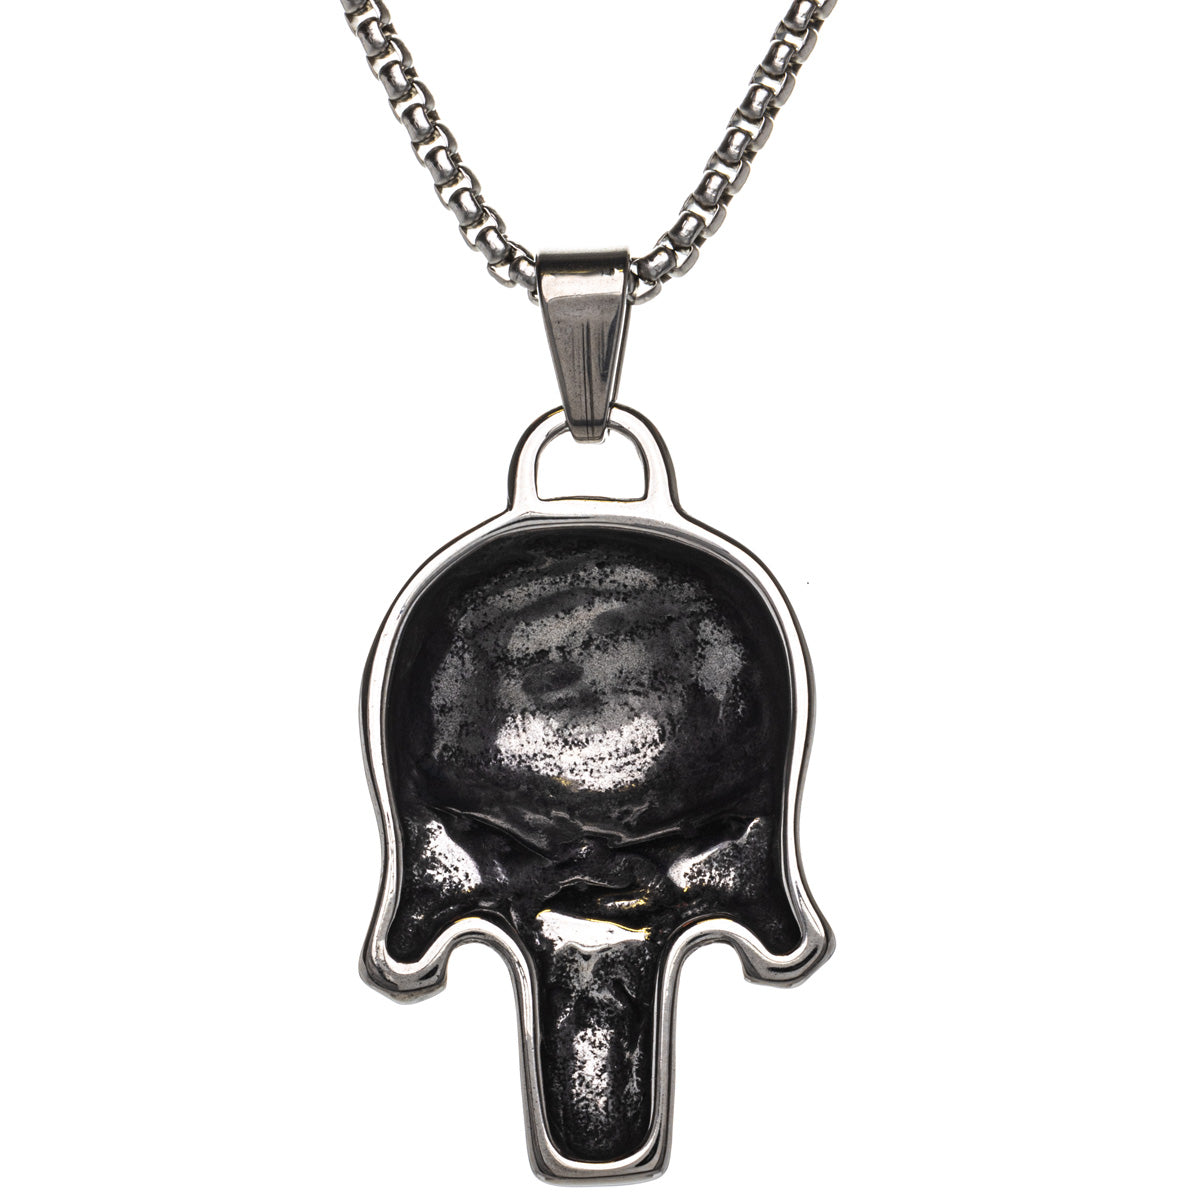 Shiny skull pendant necklace (Steel 316L)